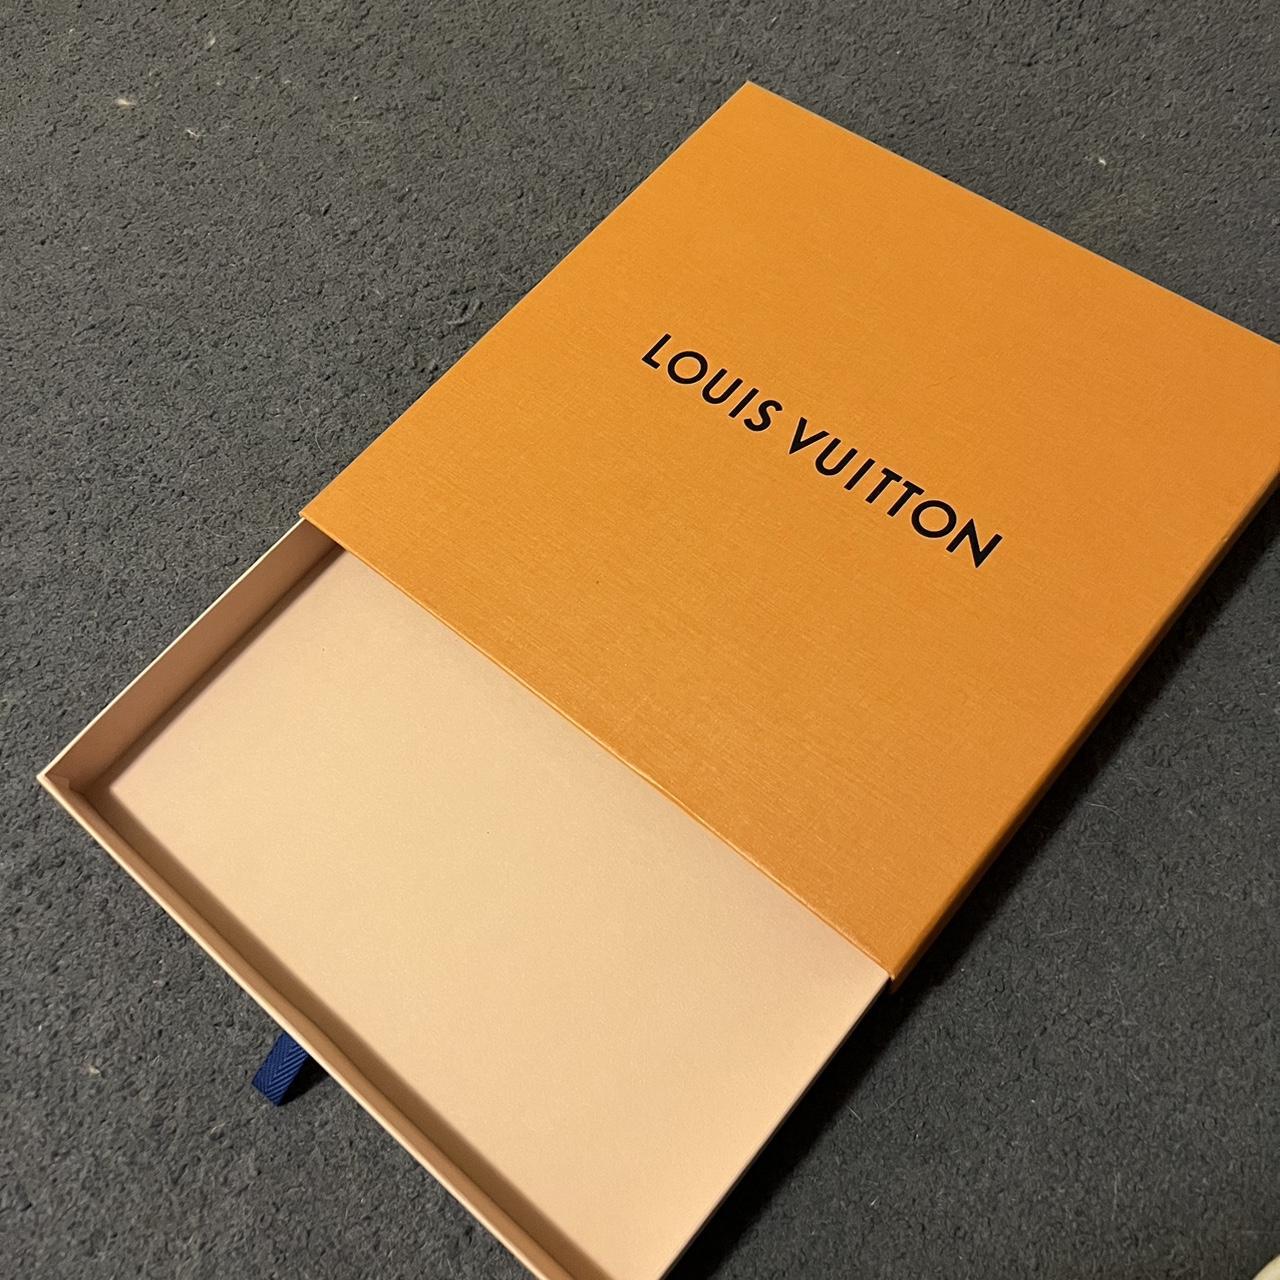 Louis Vuitton Medium Imperial Saffron Flap Storage Box – My Haute